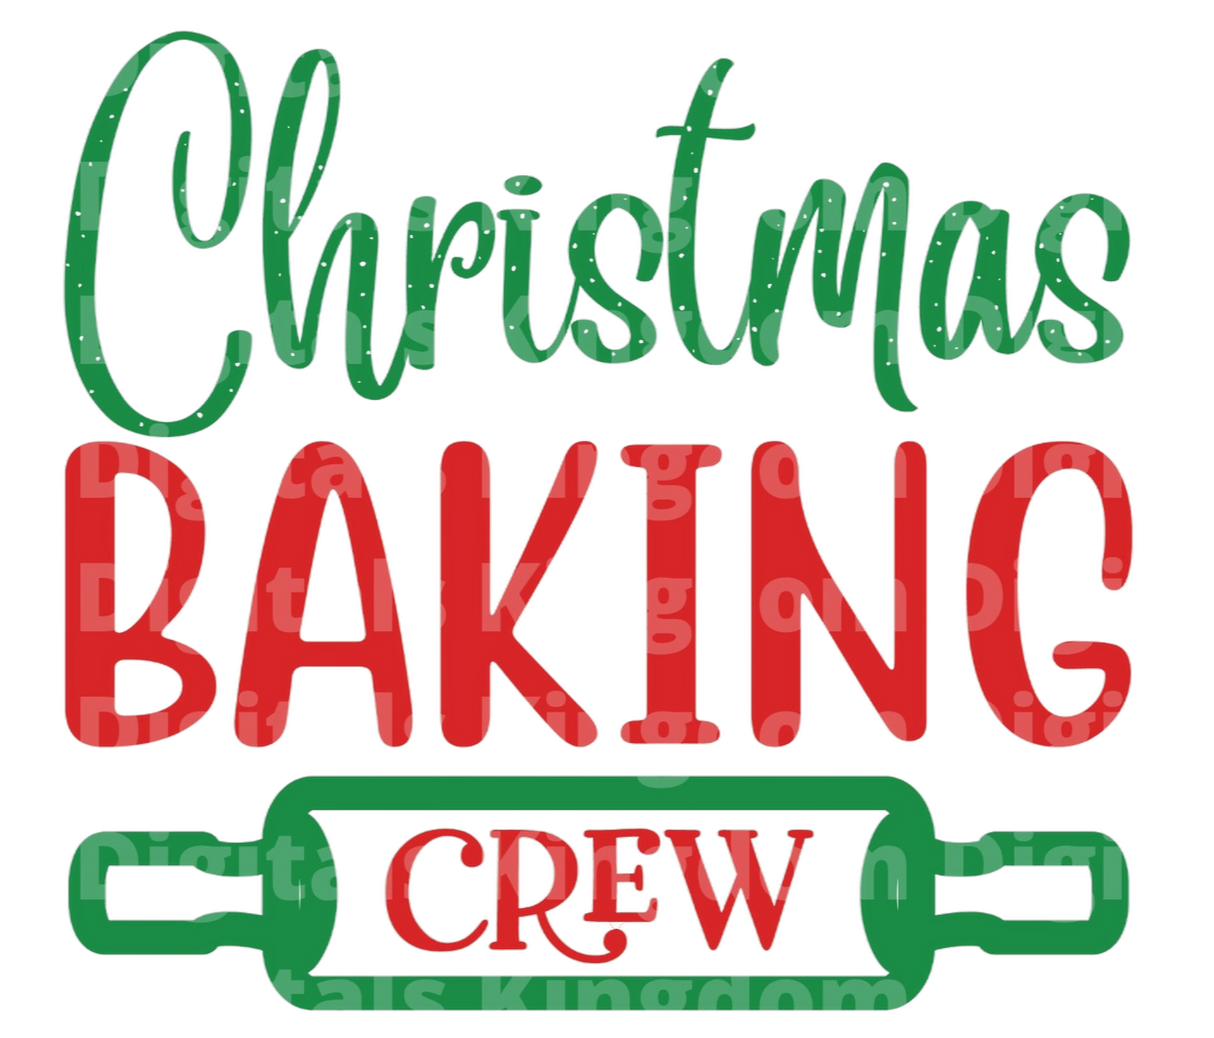 Christmas Baking crew SVG Cut File